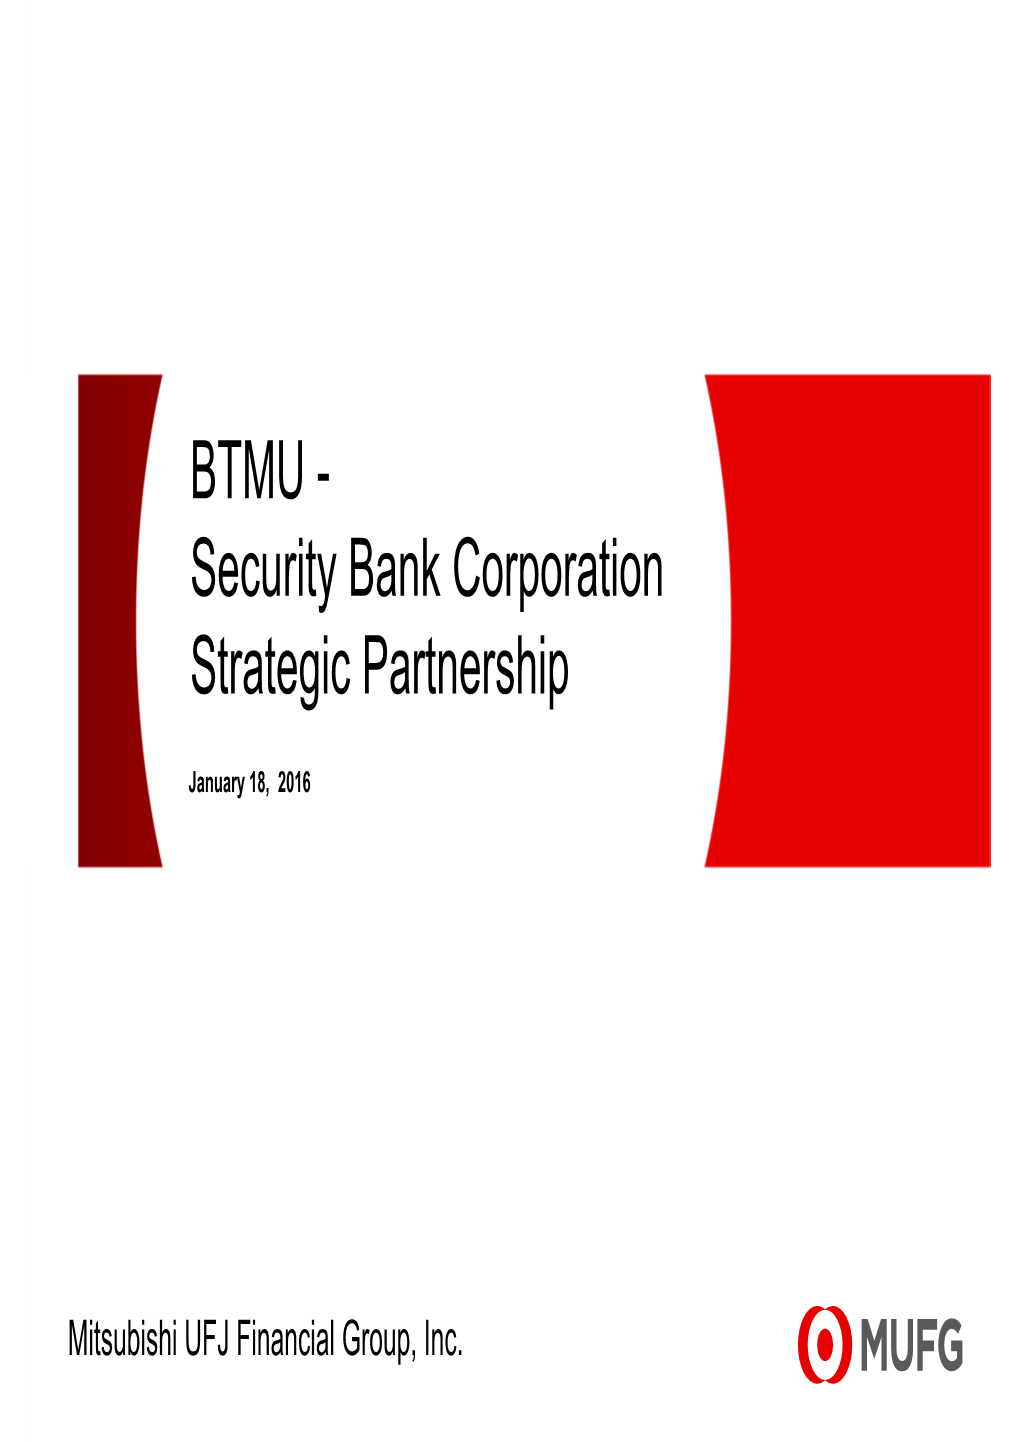 BTMU - Security Bank Corporation Strategic Partnership